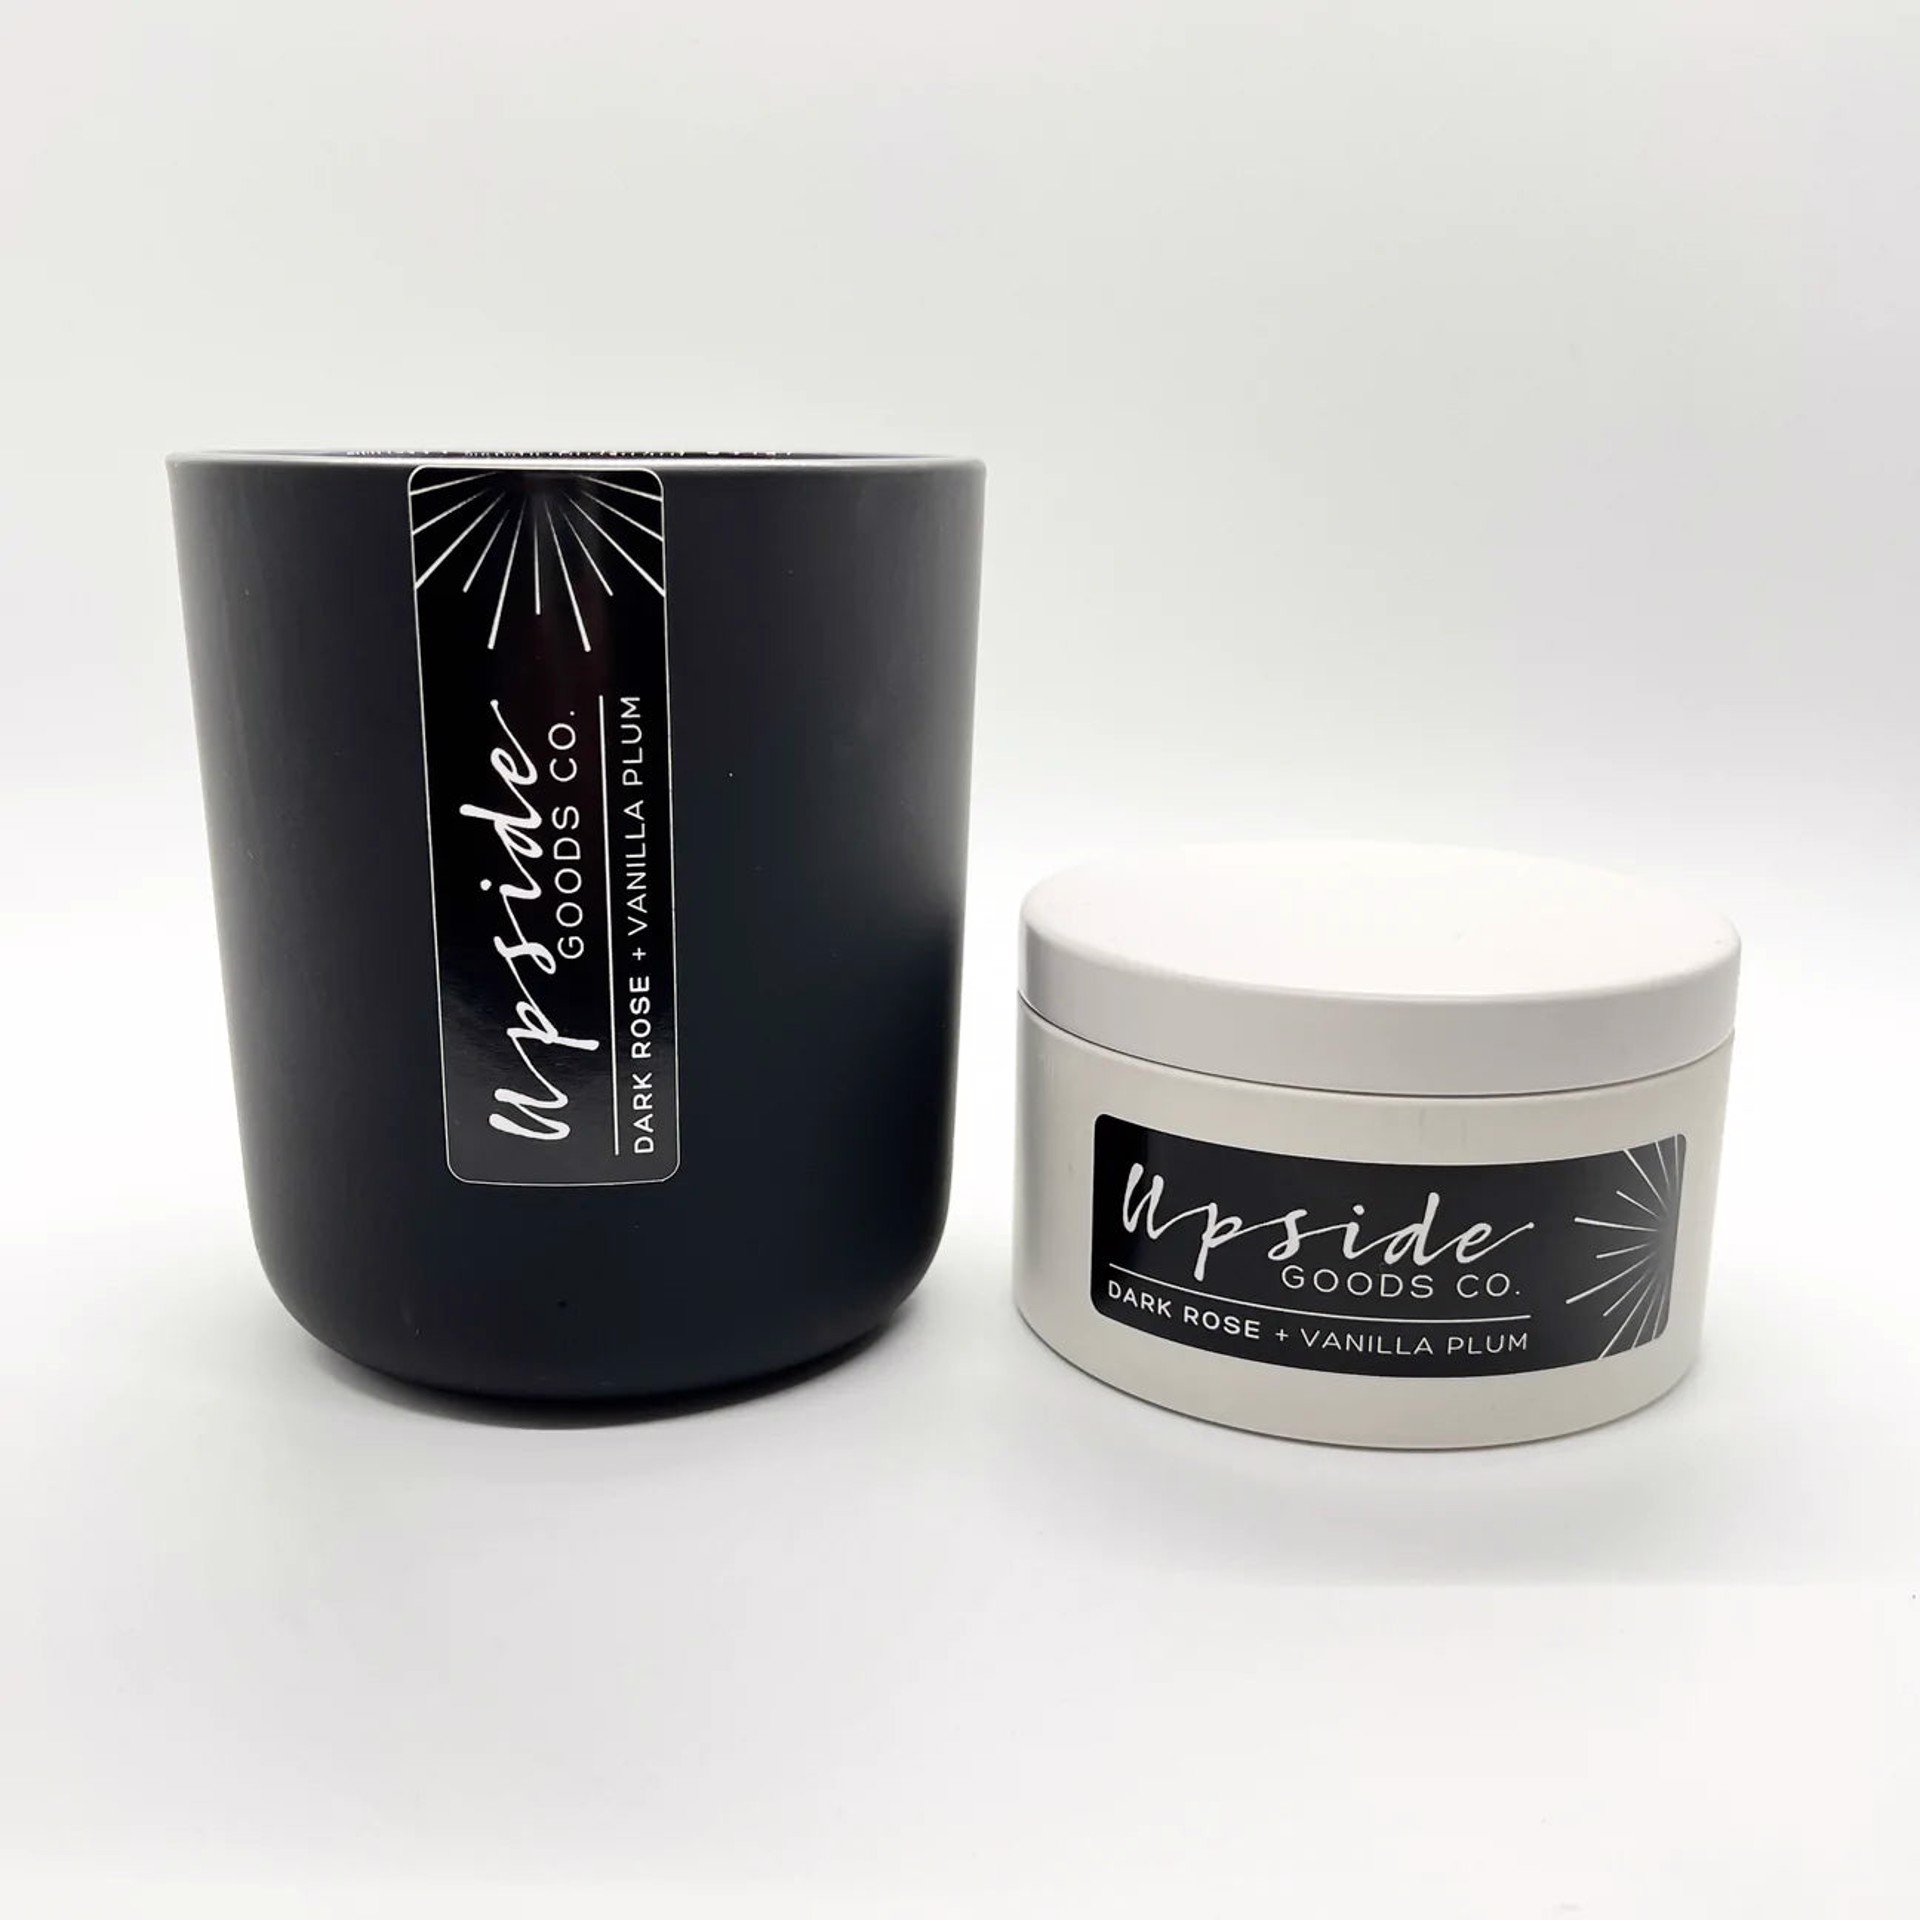 Upside Goods Candles - Small / Dark Rose + Vanilla Plum by Upside Goods